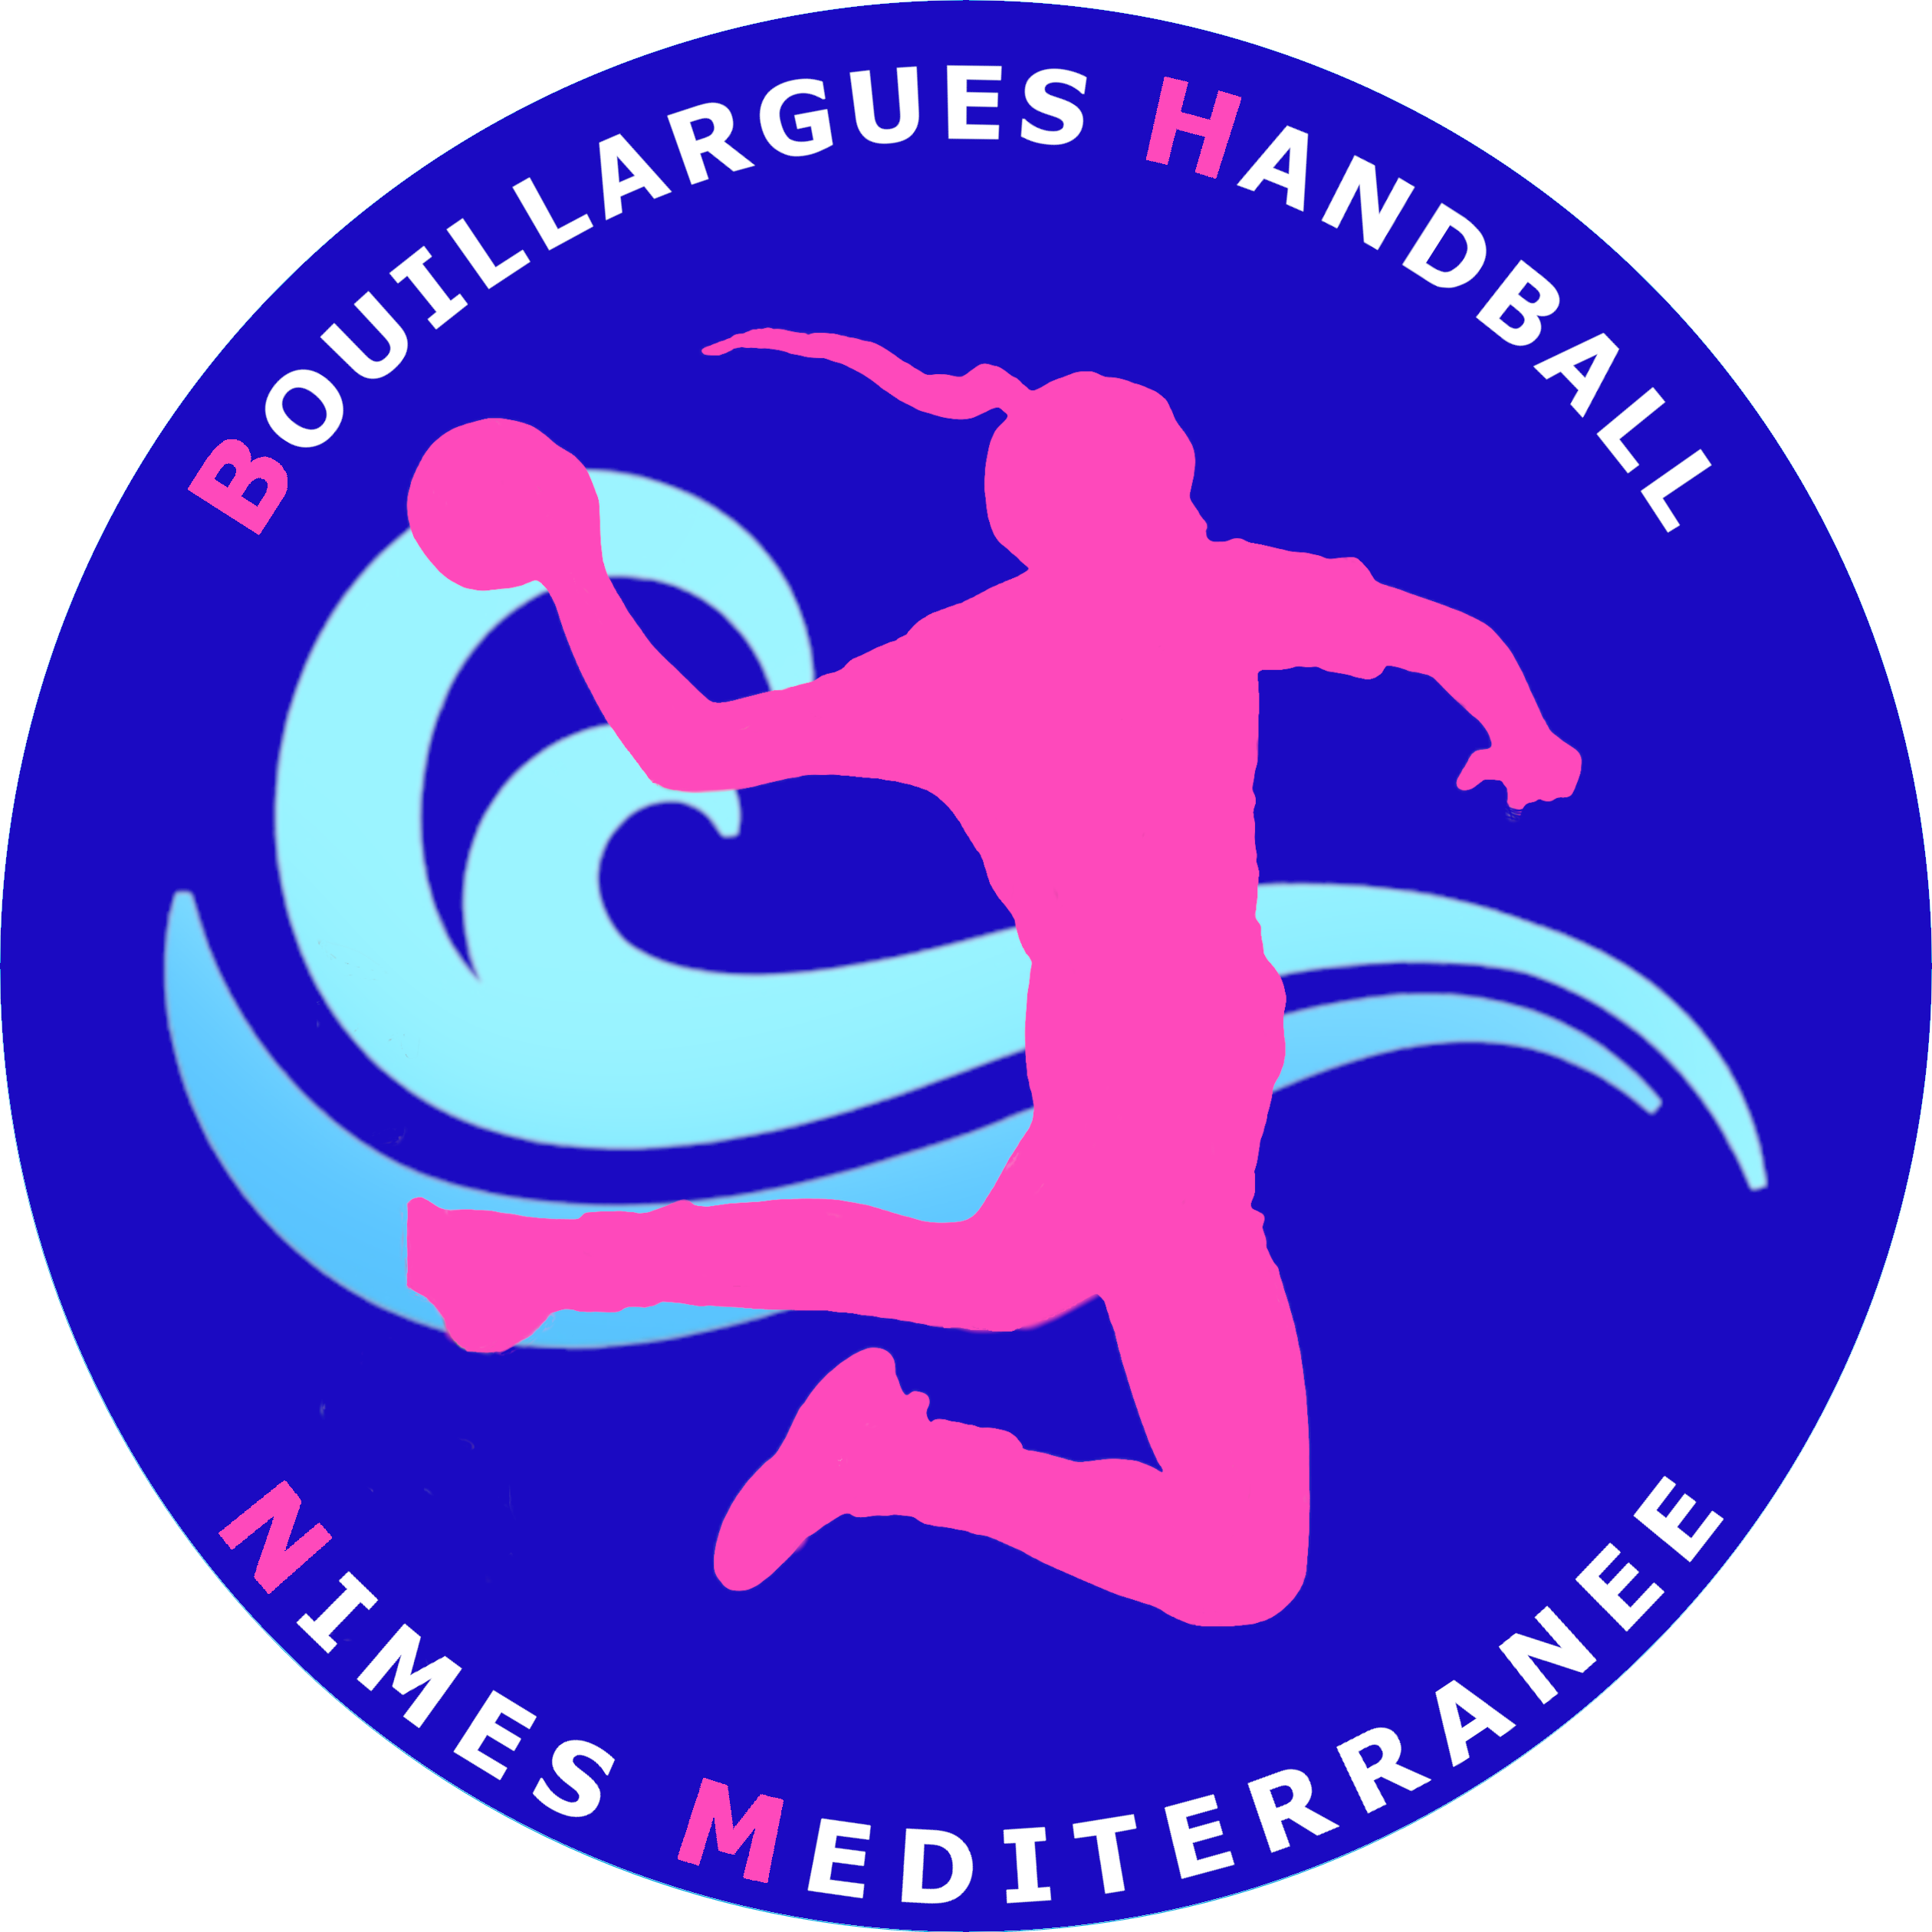 Bouillargues Handball Nîmes Méditerranée